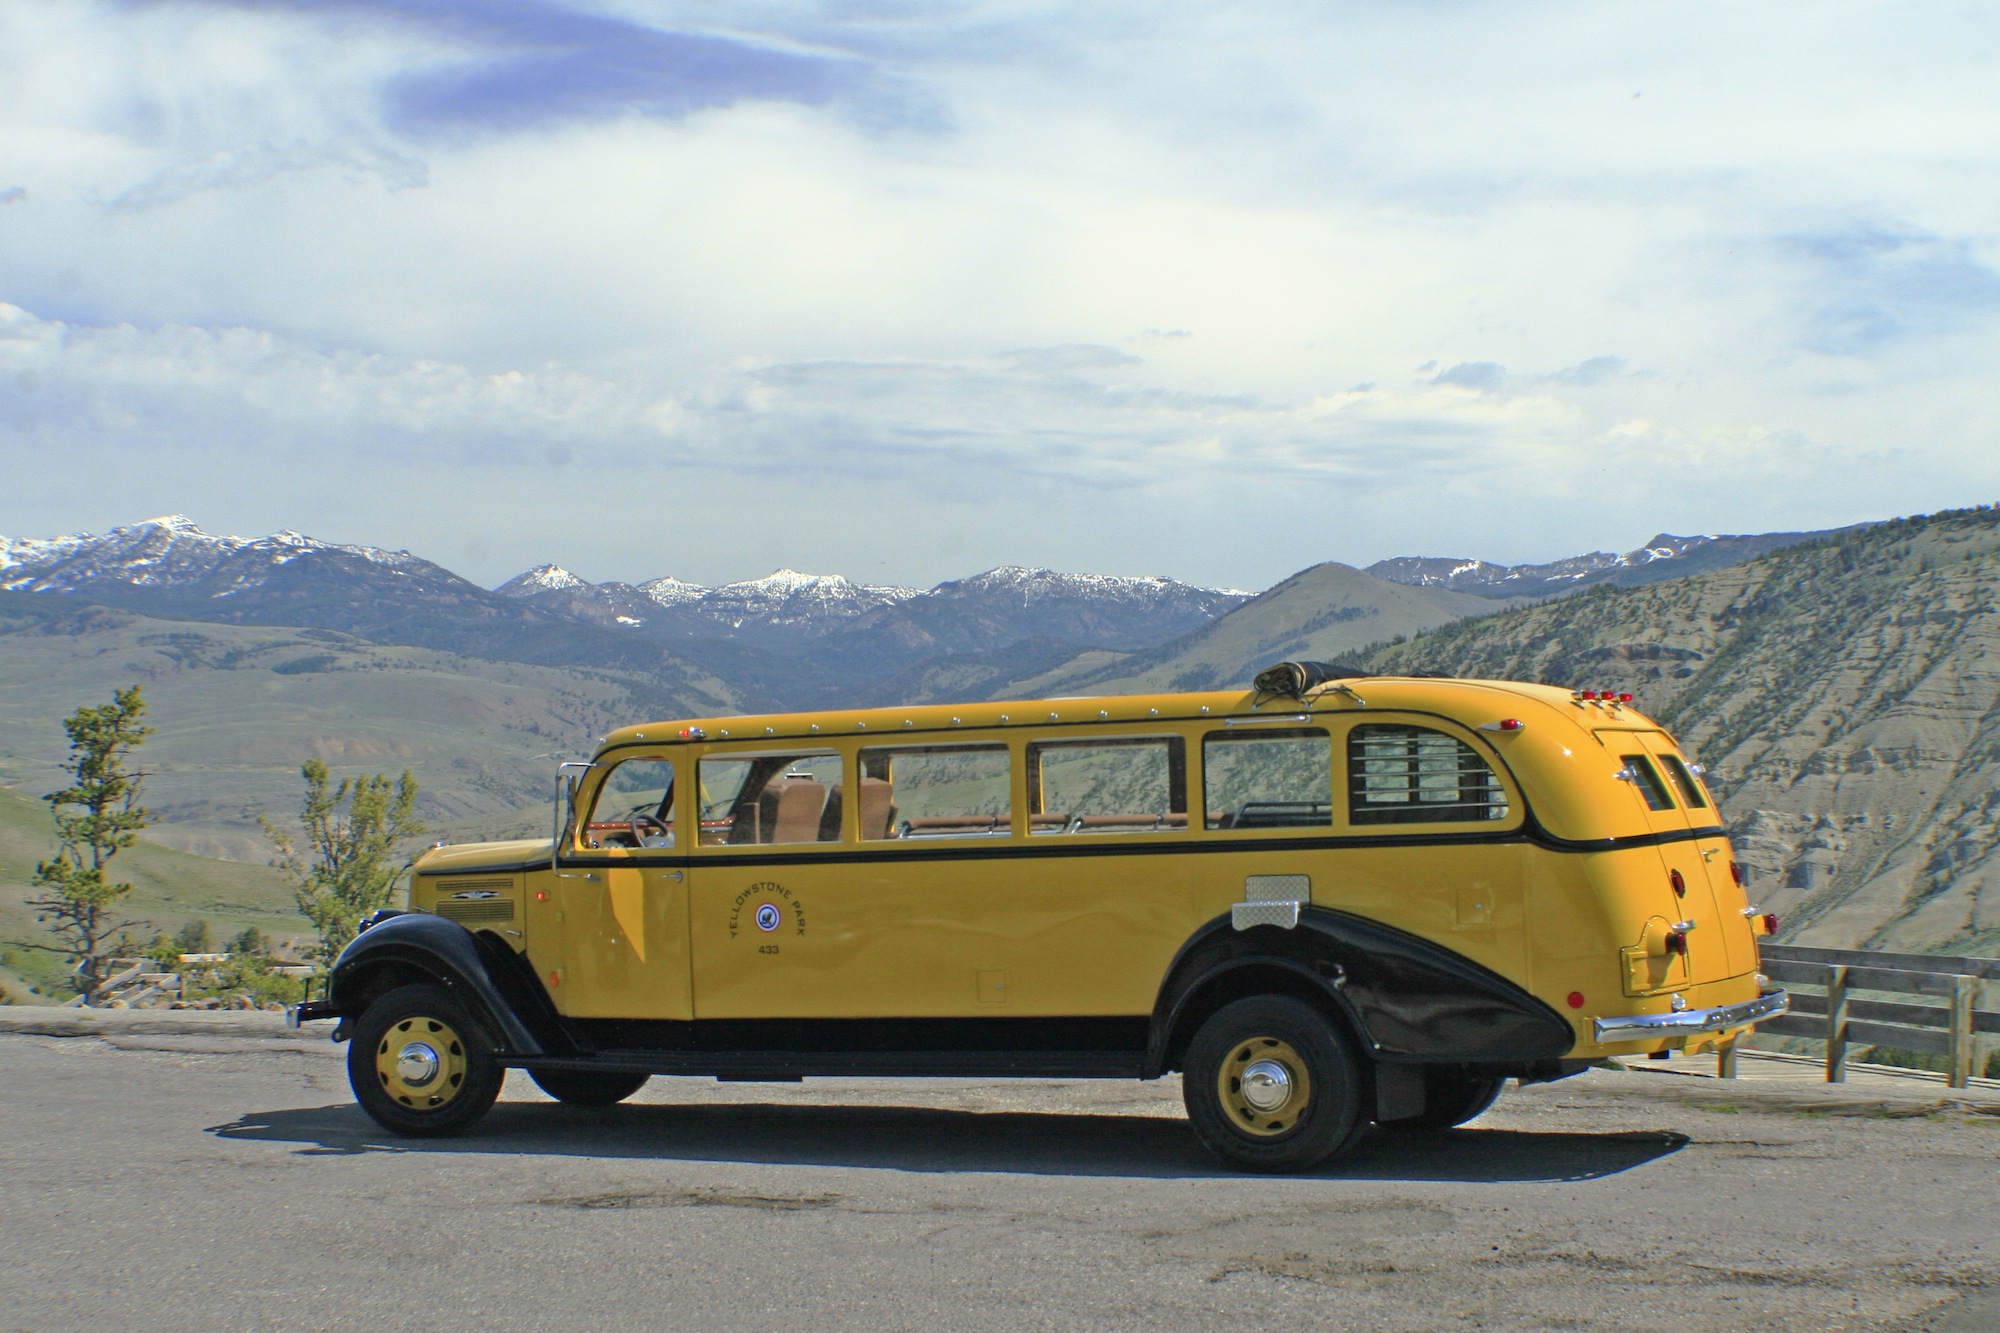 Yellowstone Tour Bus. Yellowstone National Park Lodges